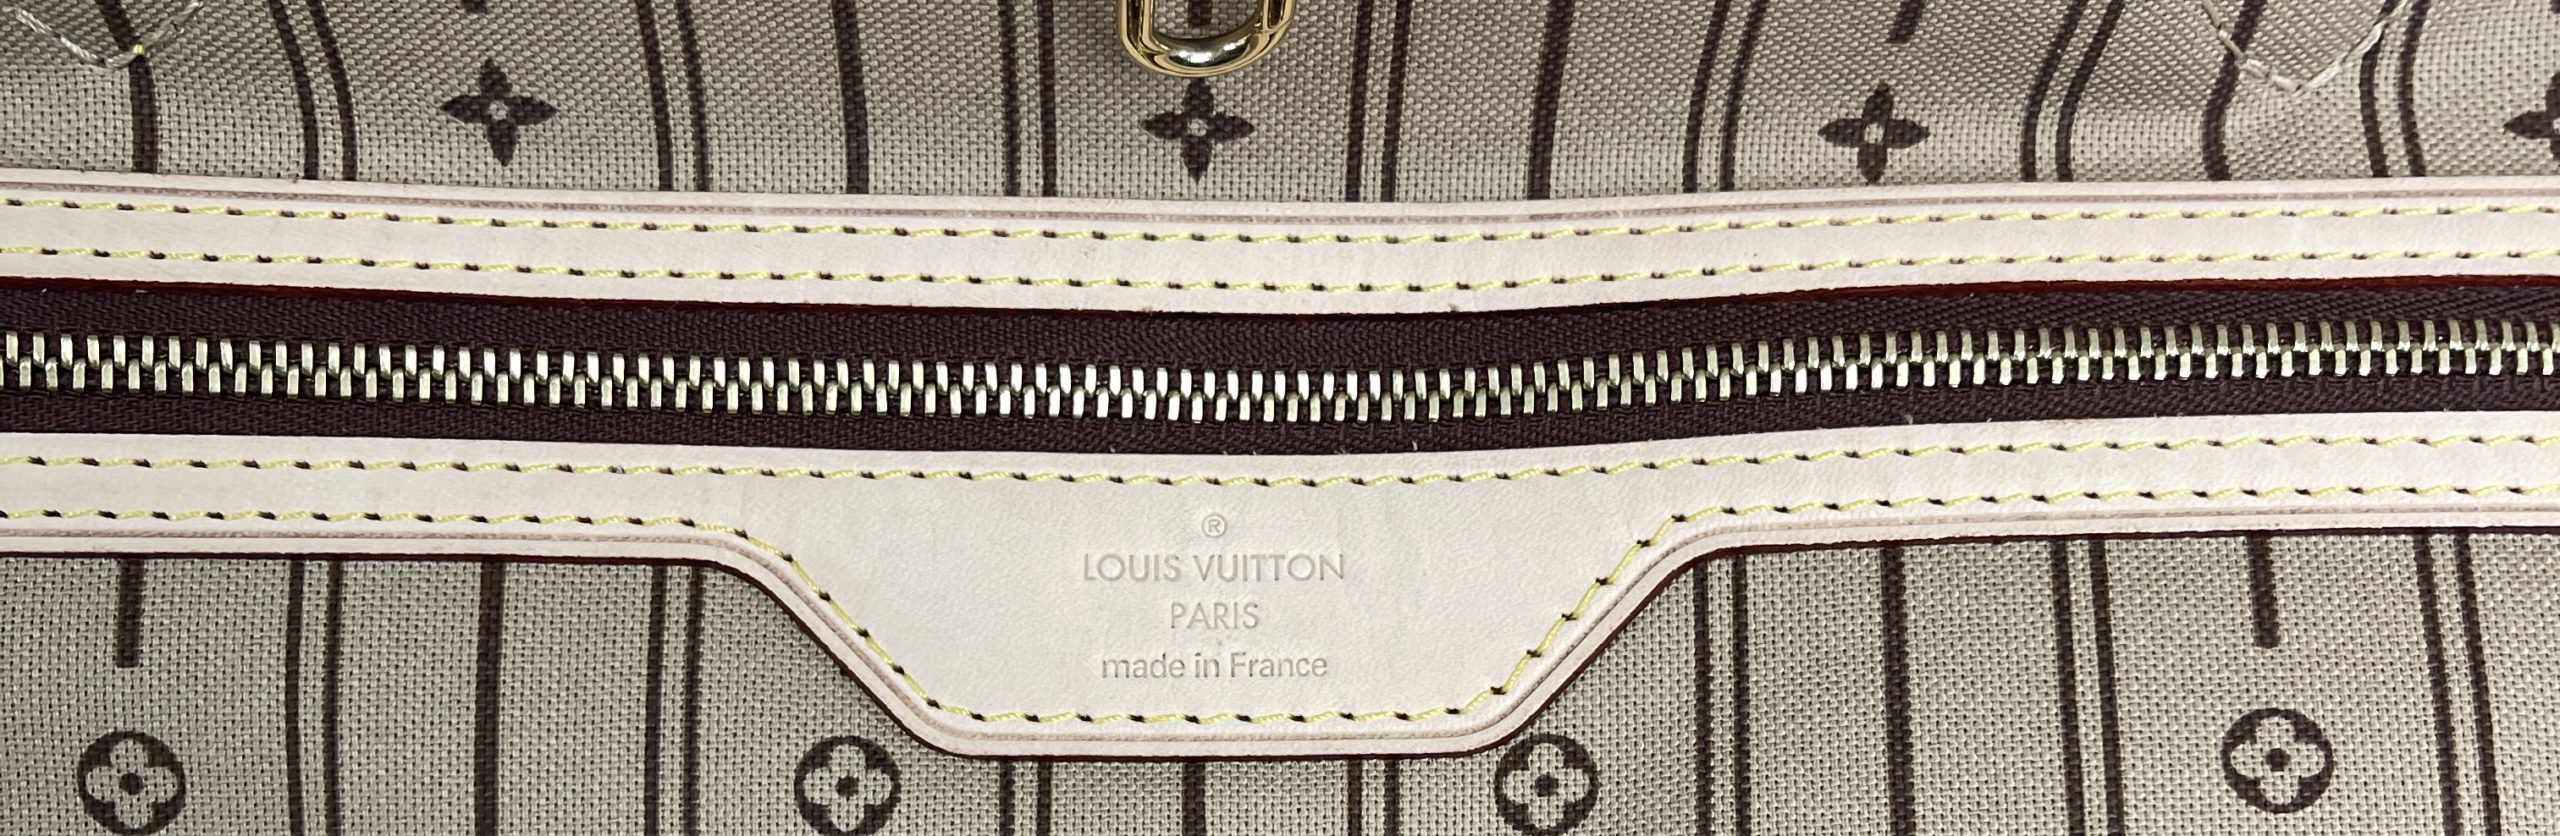 Louis Vuitton Neverfull Handbags for sale in Paris, France